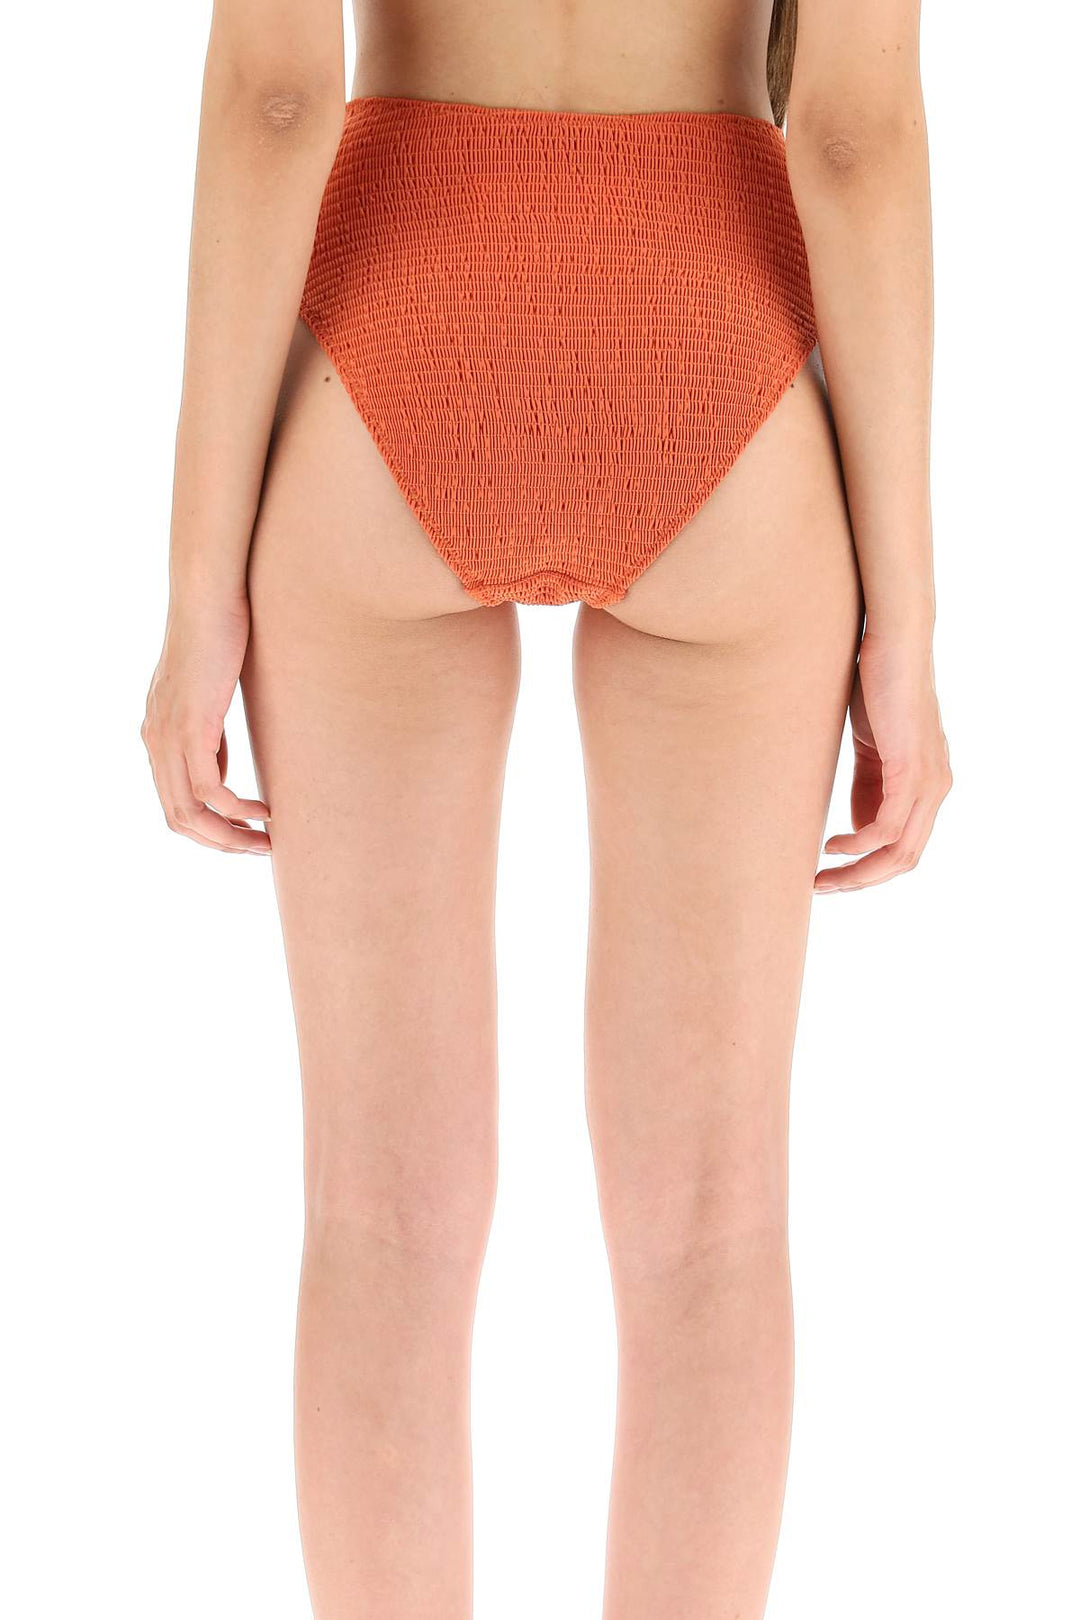 Toteme High Waisted Bikini Bottom   Arancio